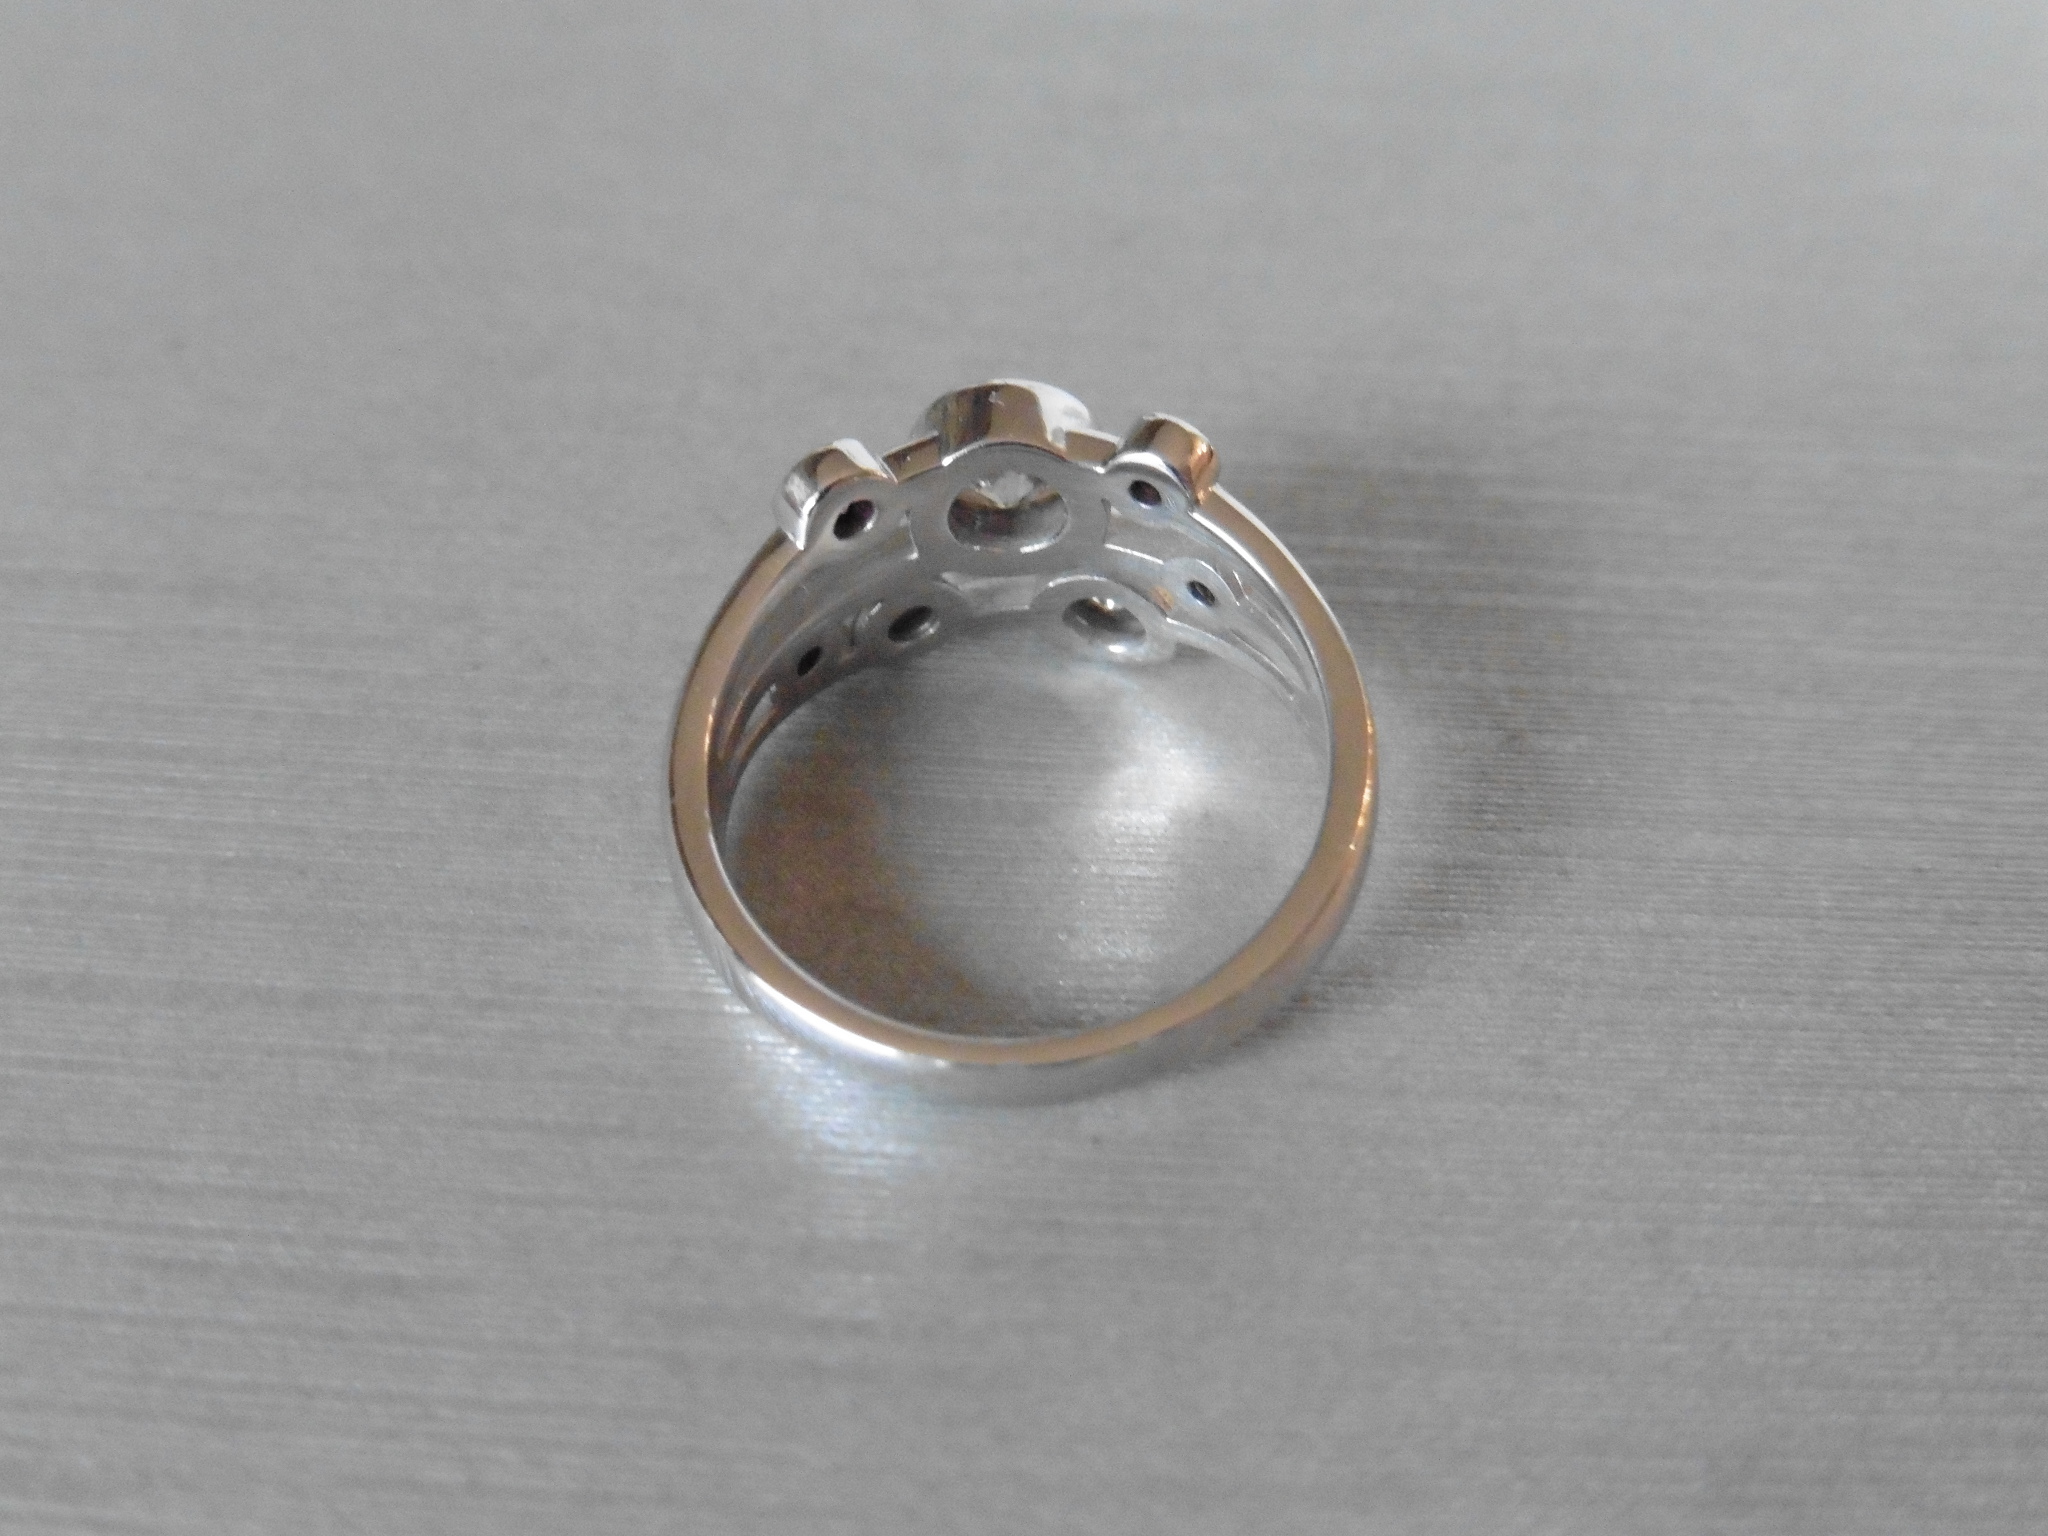 1.00ct 9ct white gold diamond dress ring, rain dance style. Set with 7 graduated brilliant cut - Image 3 of 3